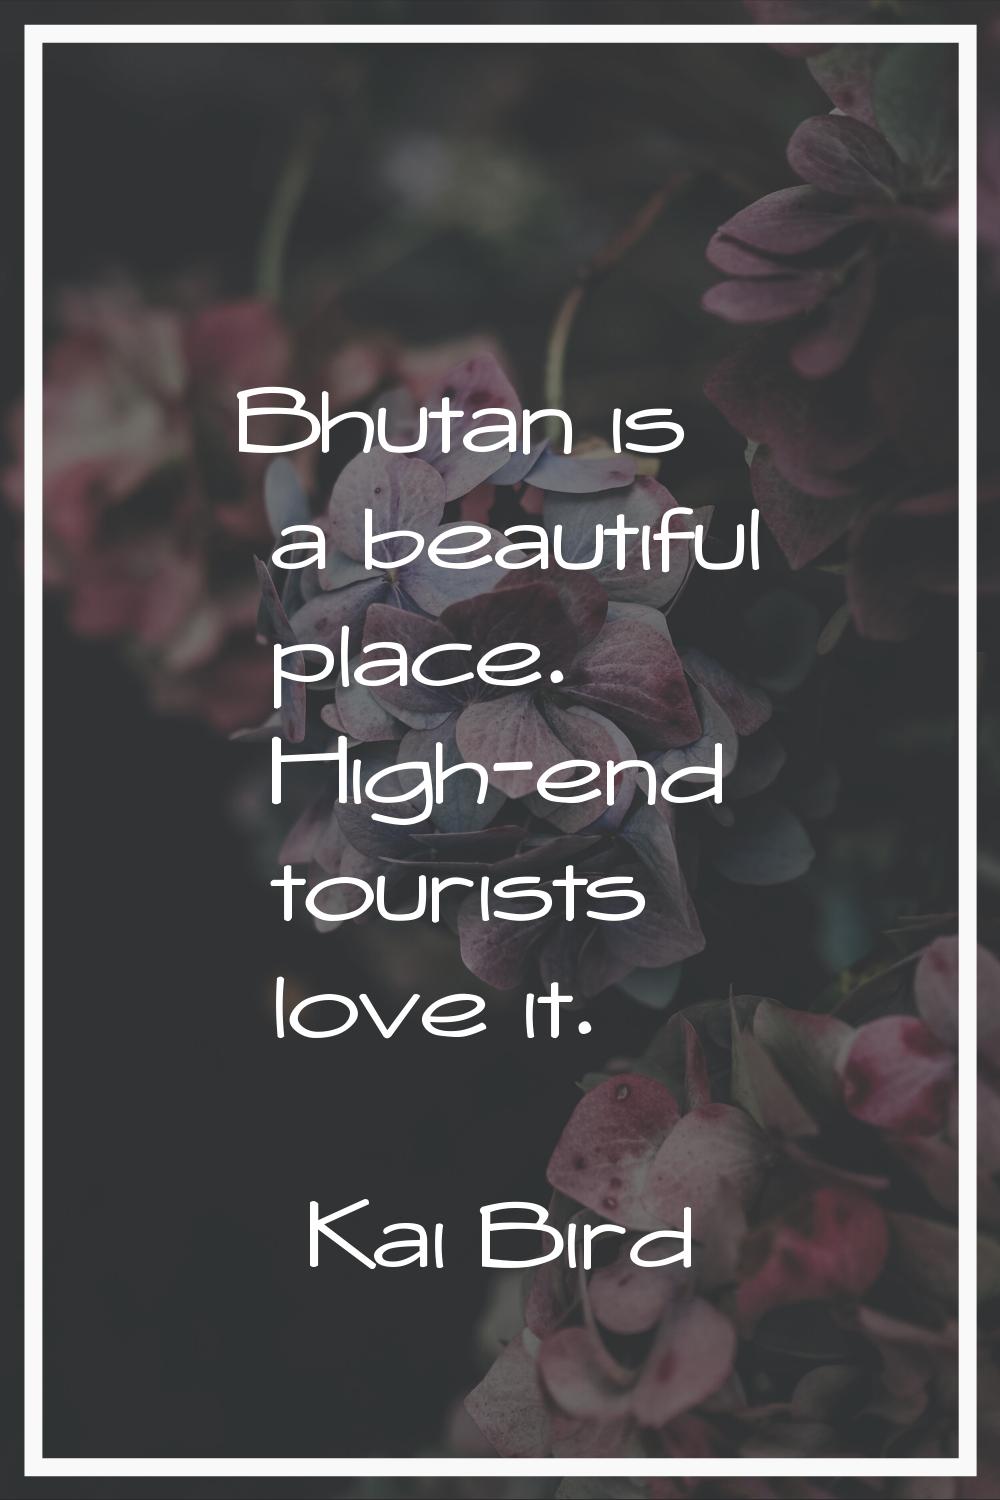 Bhutan is a beautiful place. High-end tourists love it.